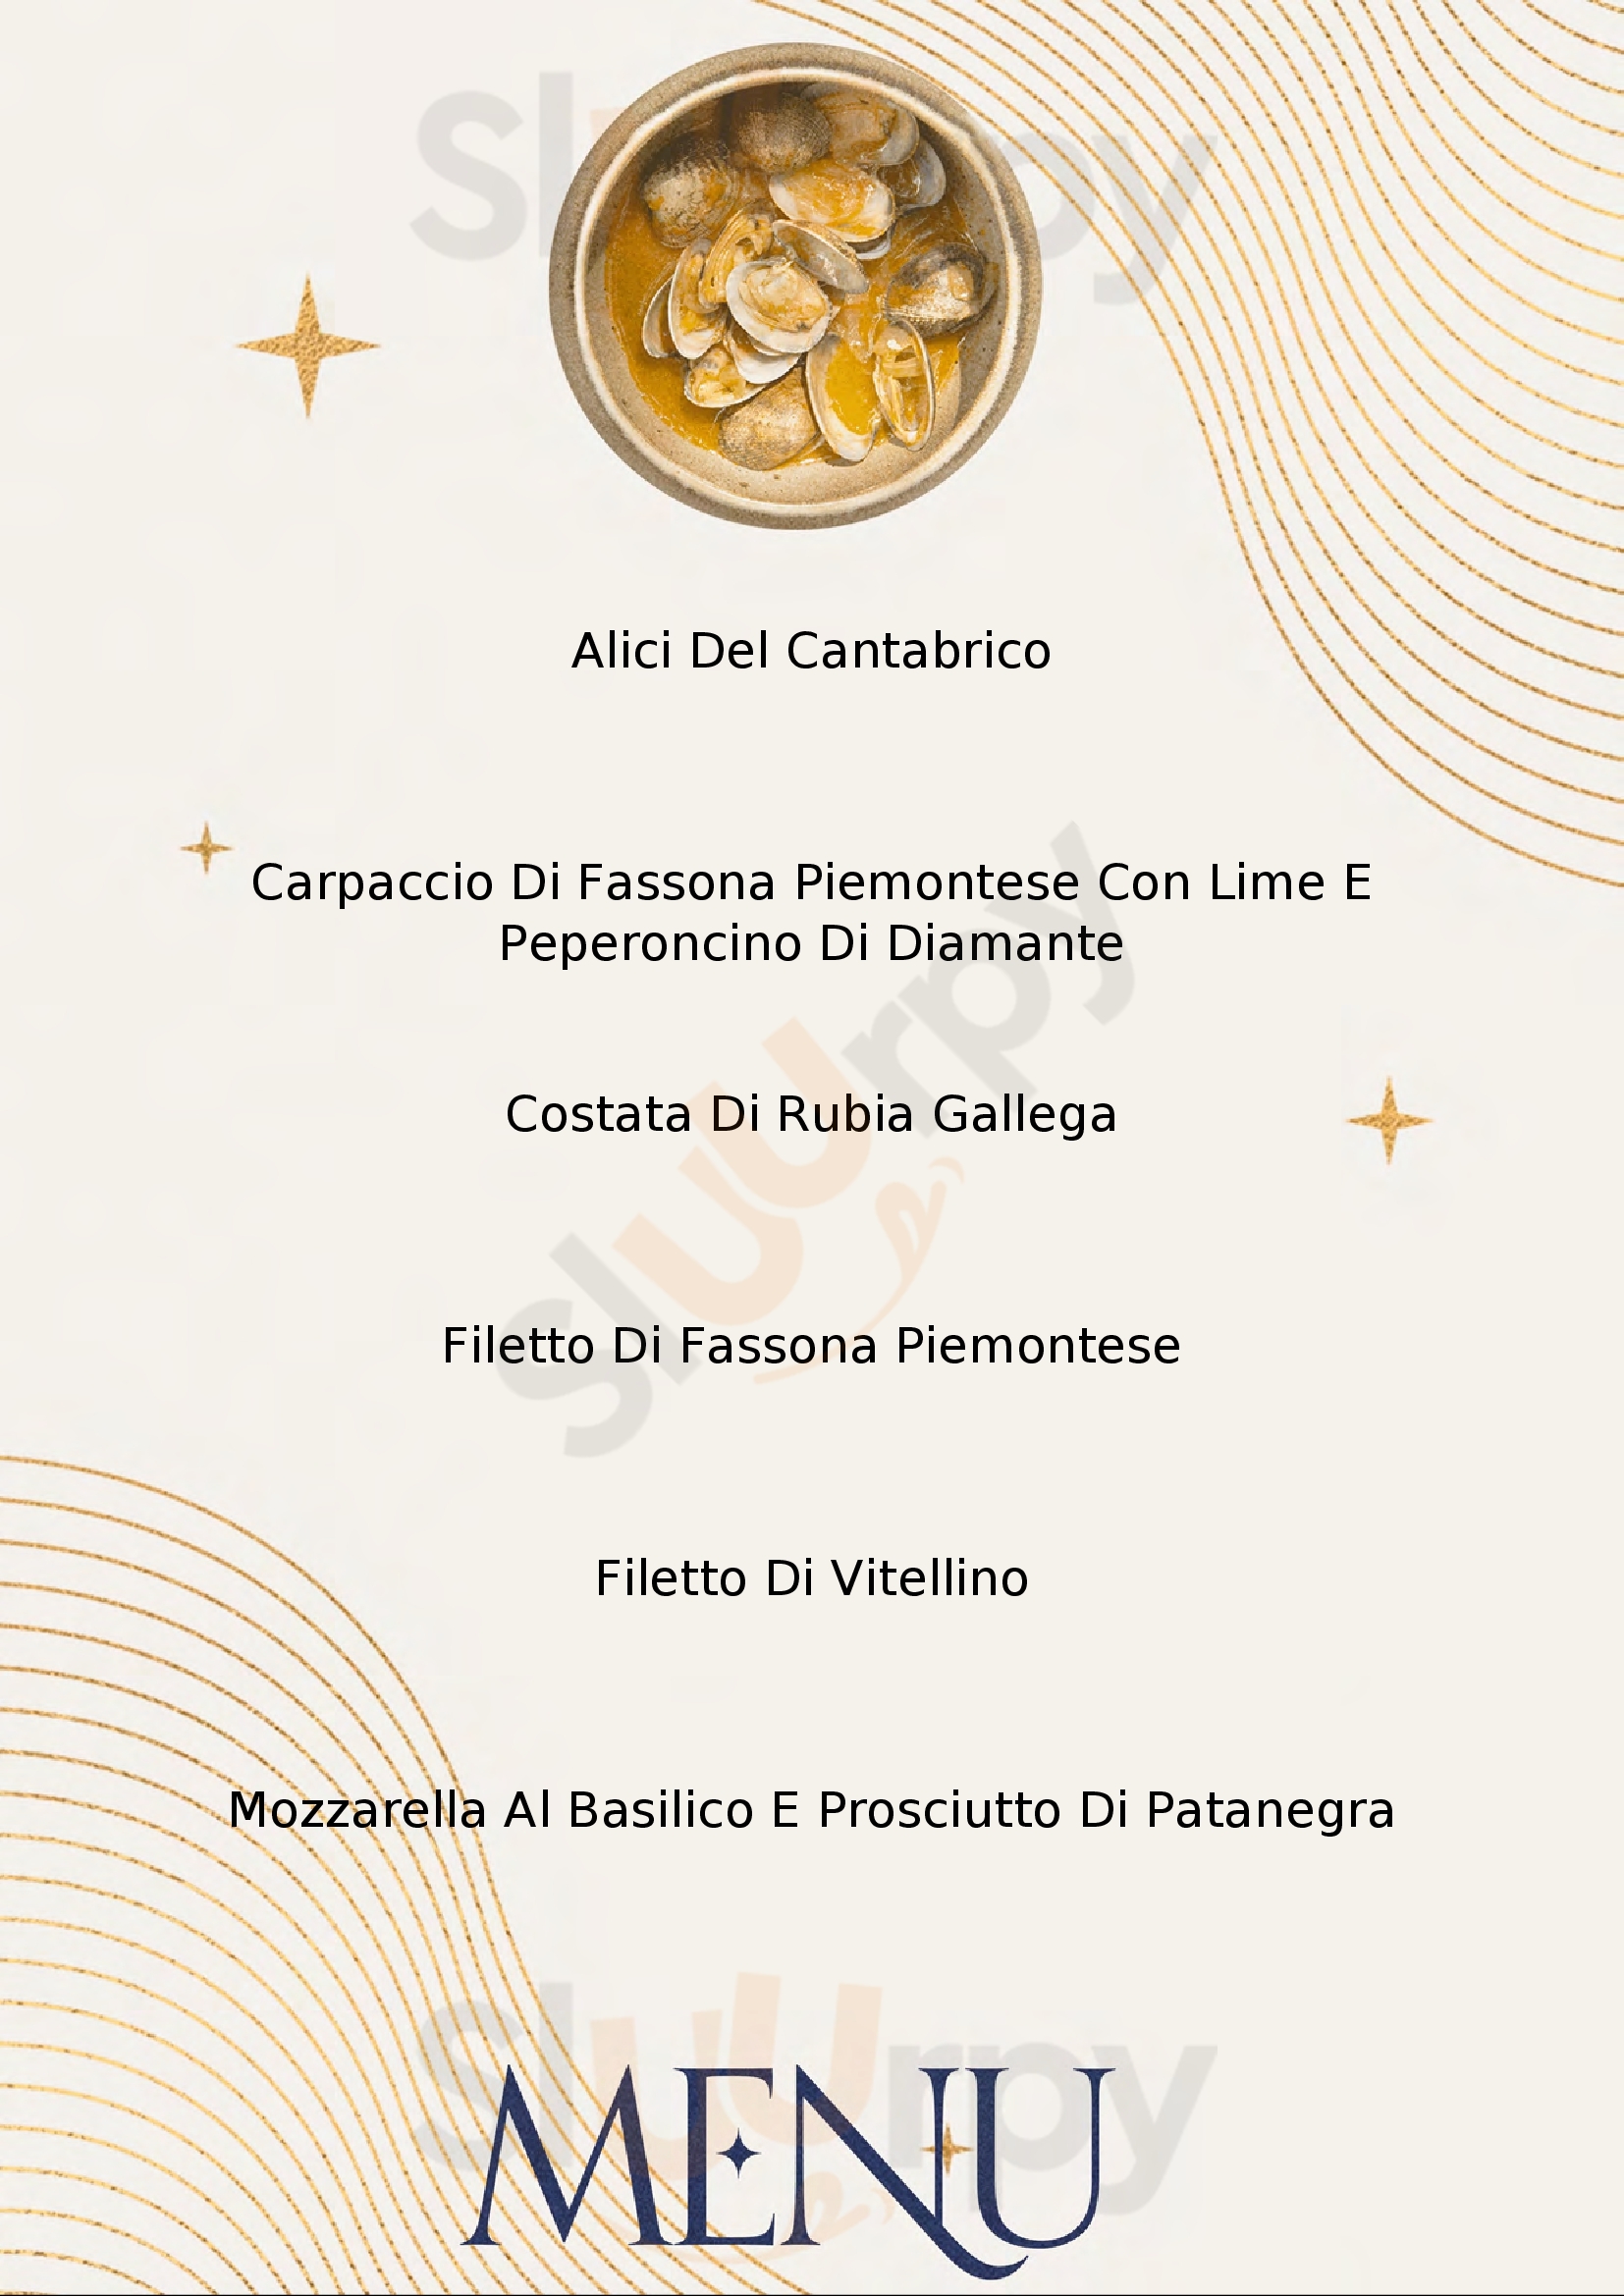 Ristorante Plomo contemporary food Reggio Calabria menù 1 pagina